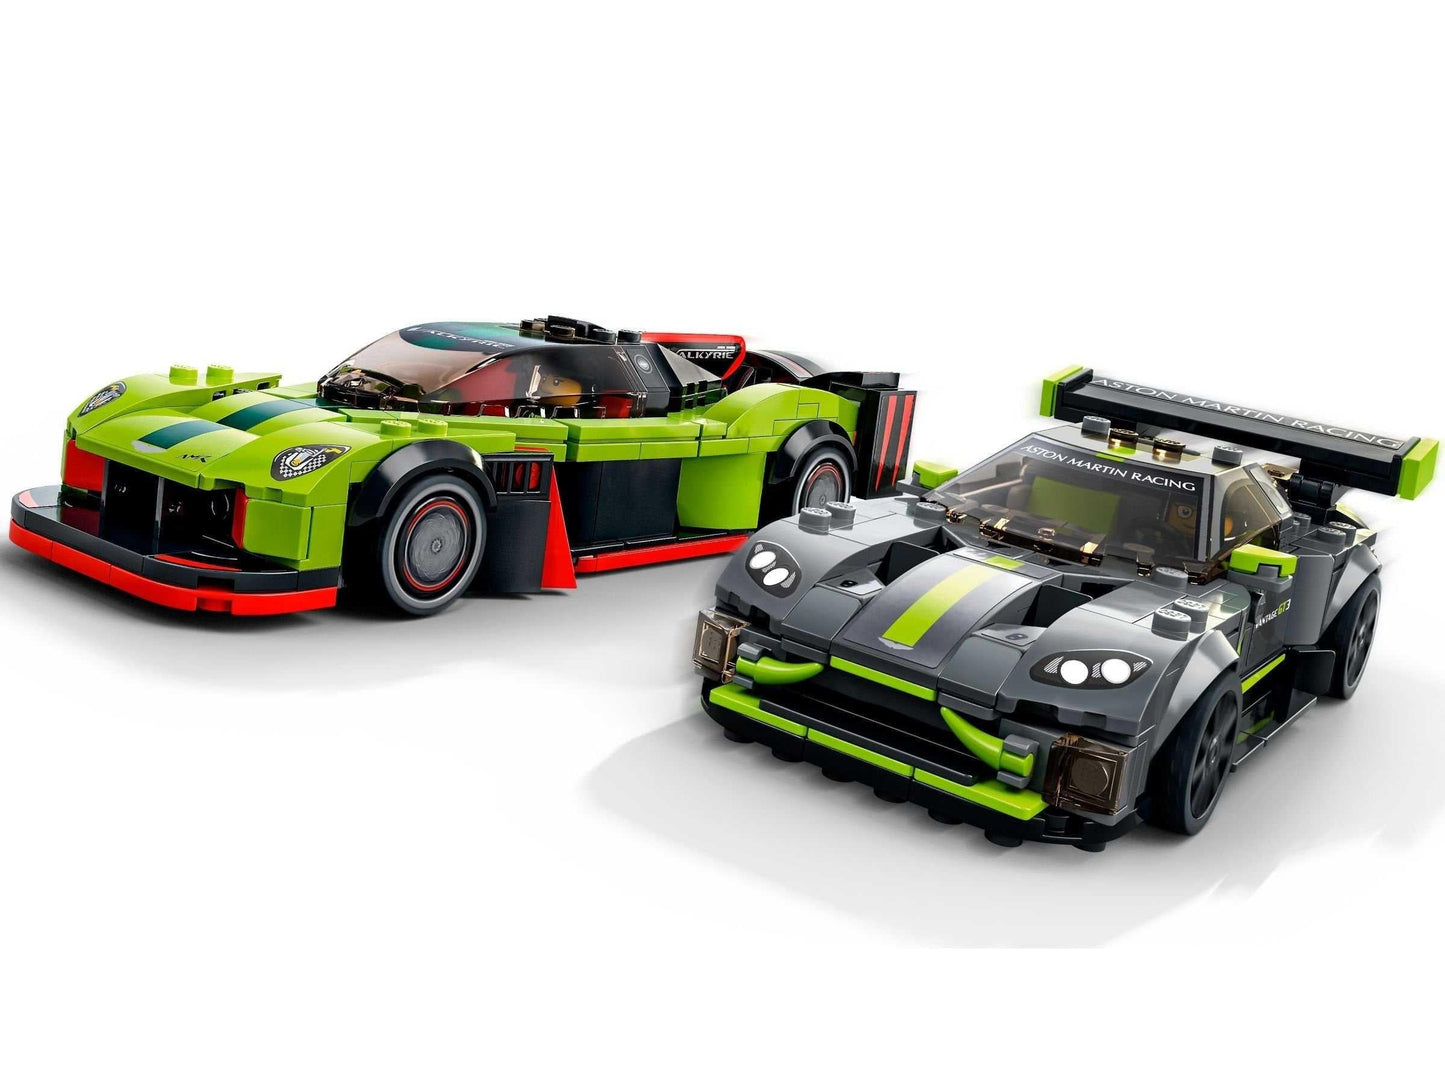 LEGO® Speed Champions 76910 Aston Martin Valkyrie AMR Pro & Aston Martin Vantage GT3 - Peer Online Shop